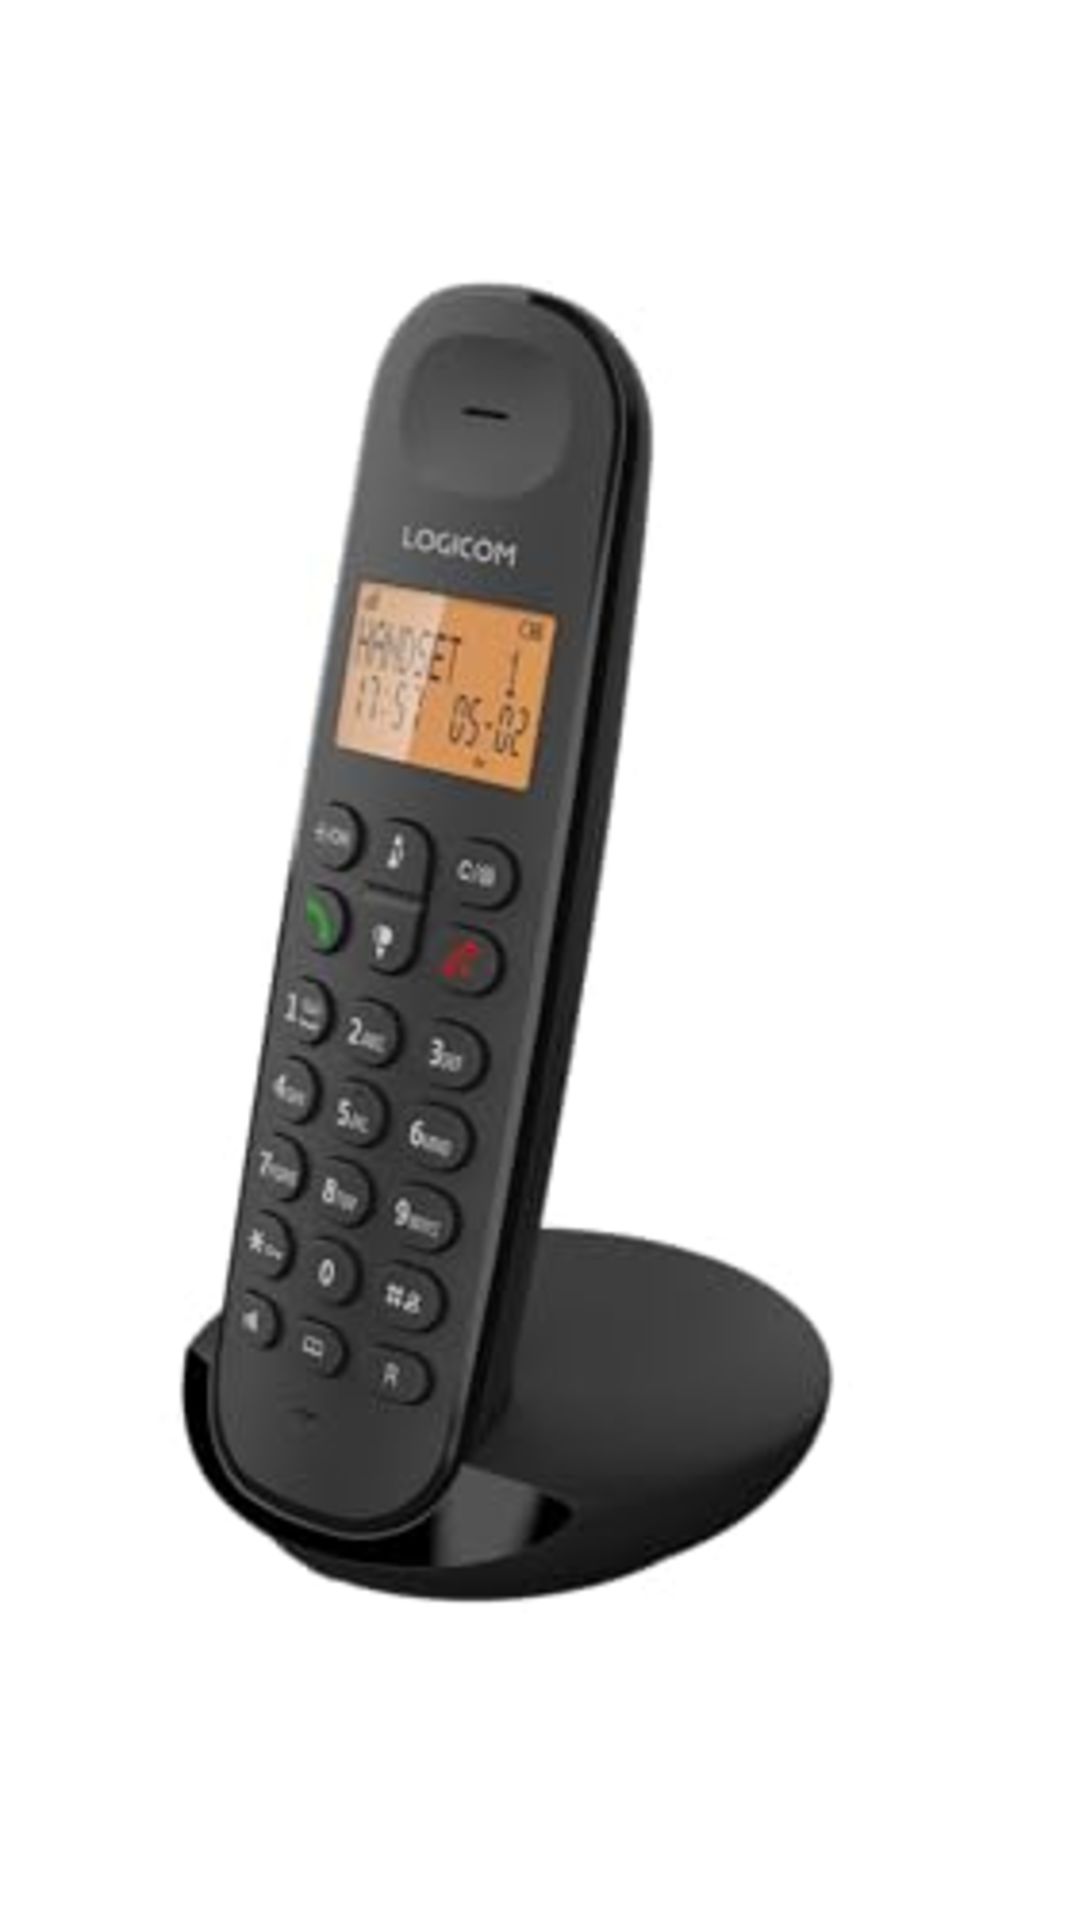 Logicom ILOA 150 Cordless Fixed Telephone without Answering Machine - Solo - Analog an - Image 4 of 6